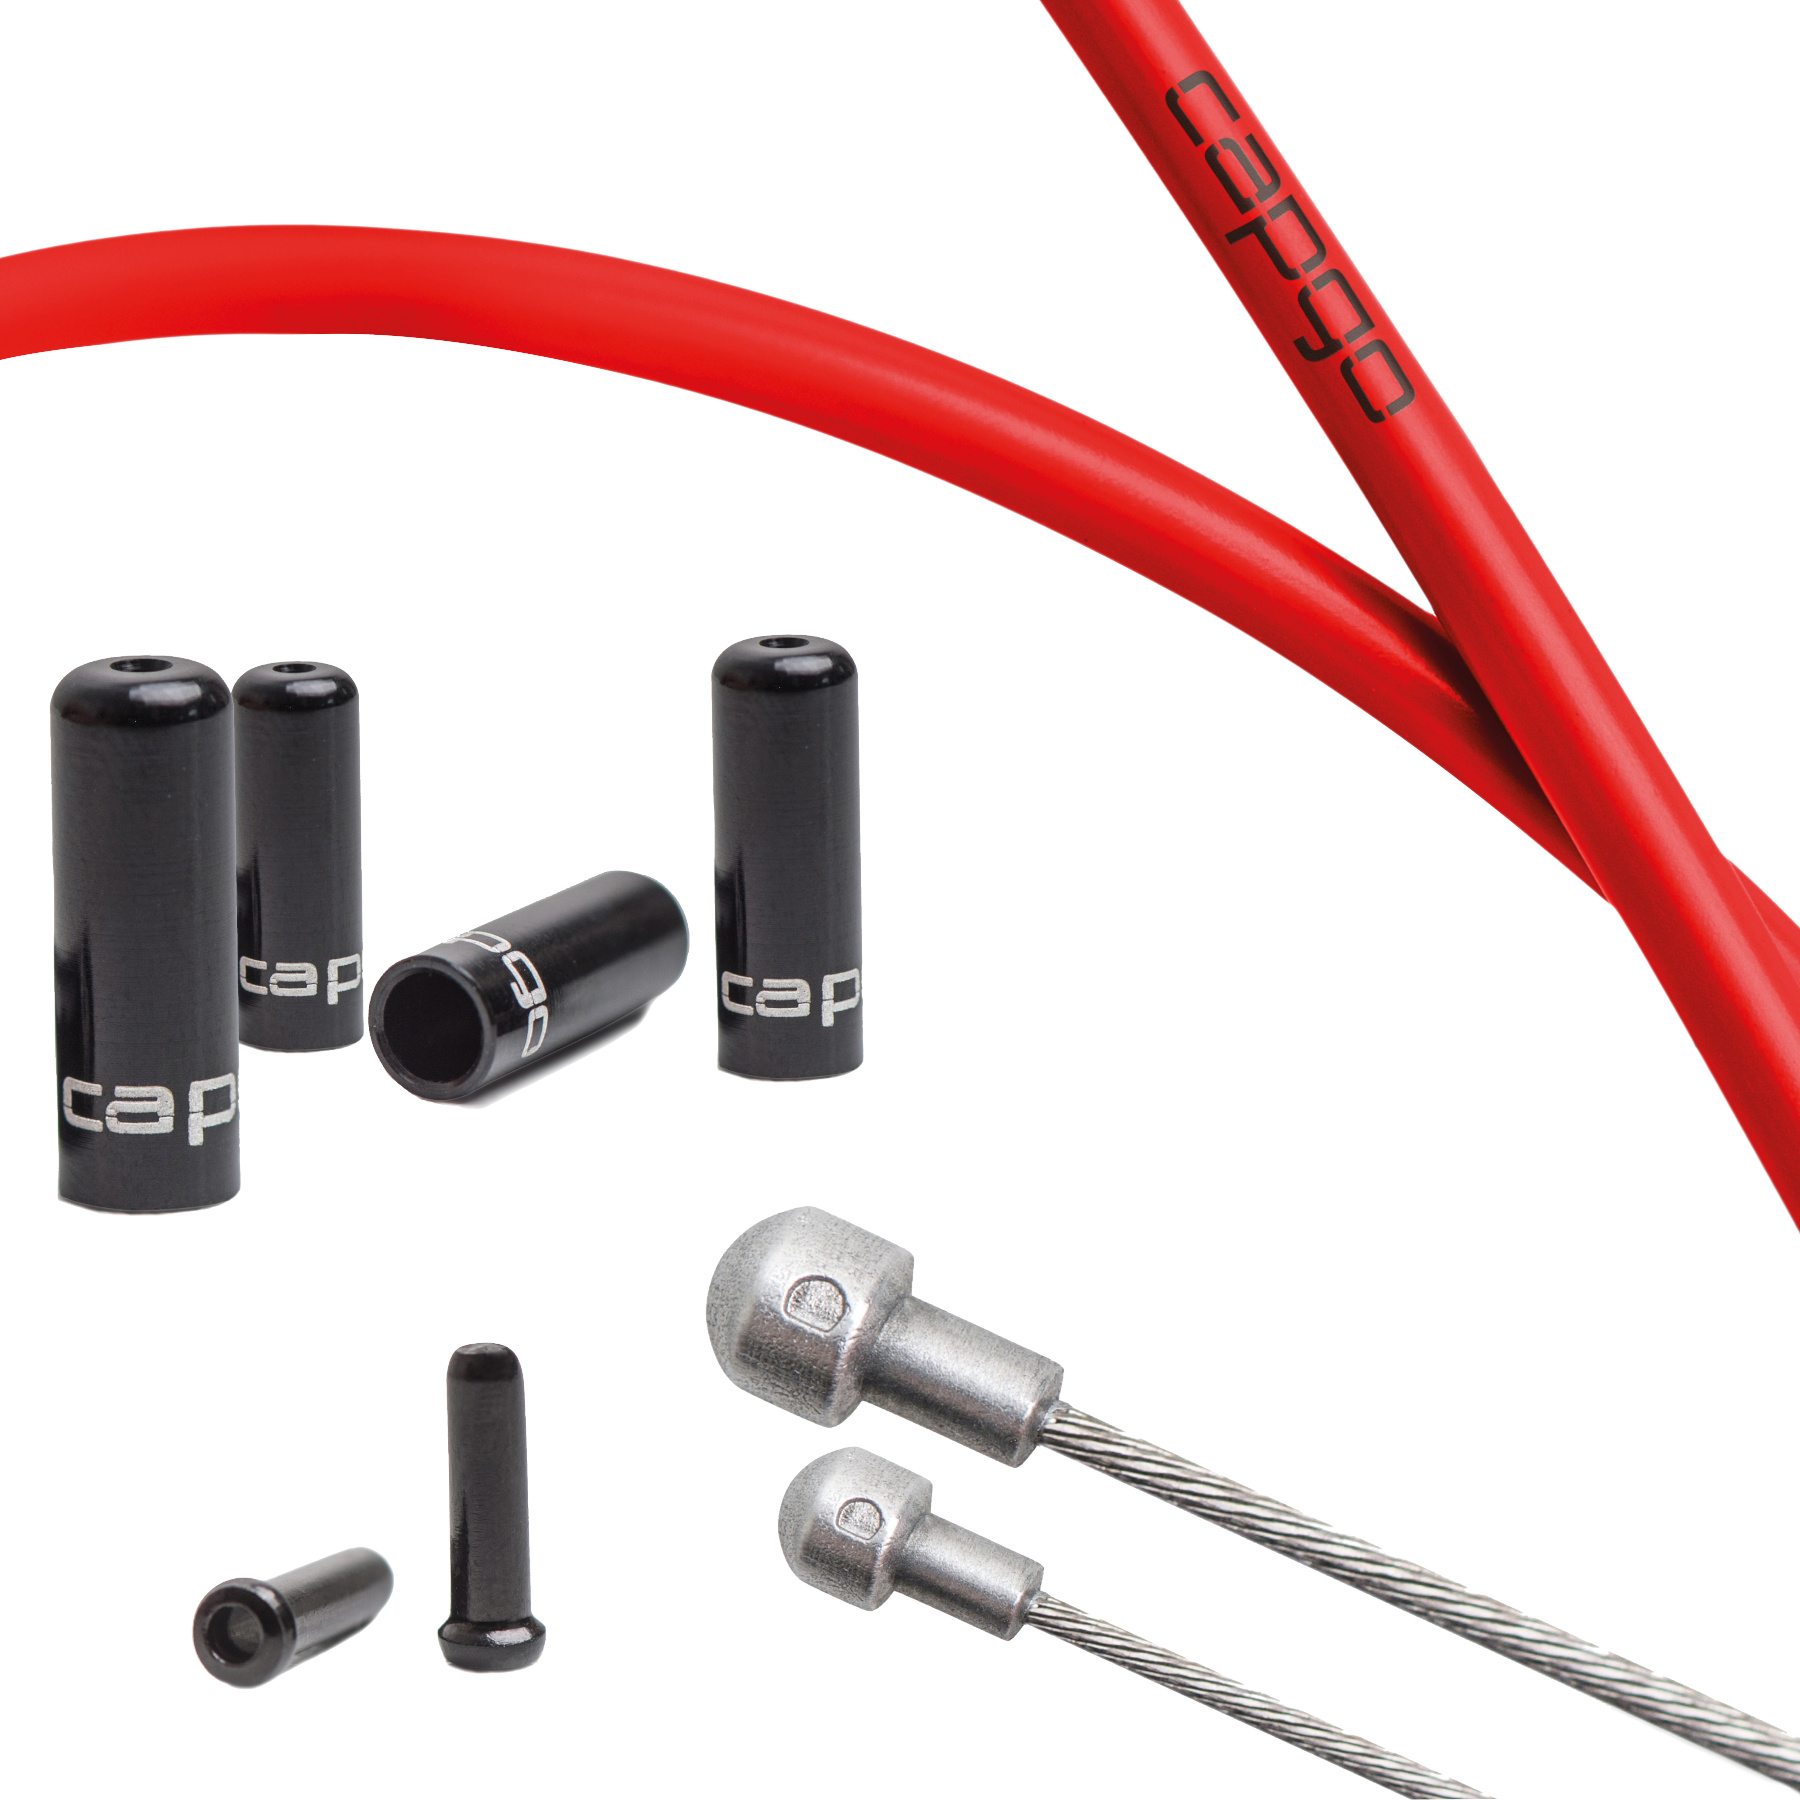 Productfoto van capgo Blue Line Brake Cable Set - Stainless Steel - PTFE - Shimano/SRAM Road - red